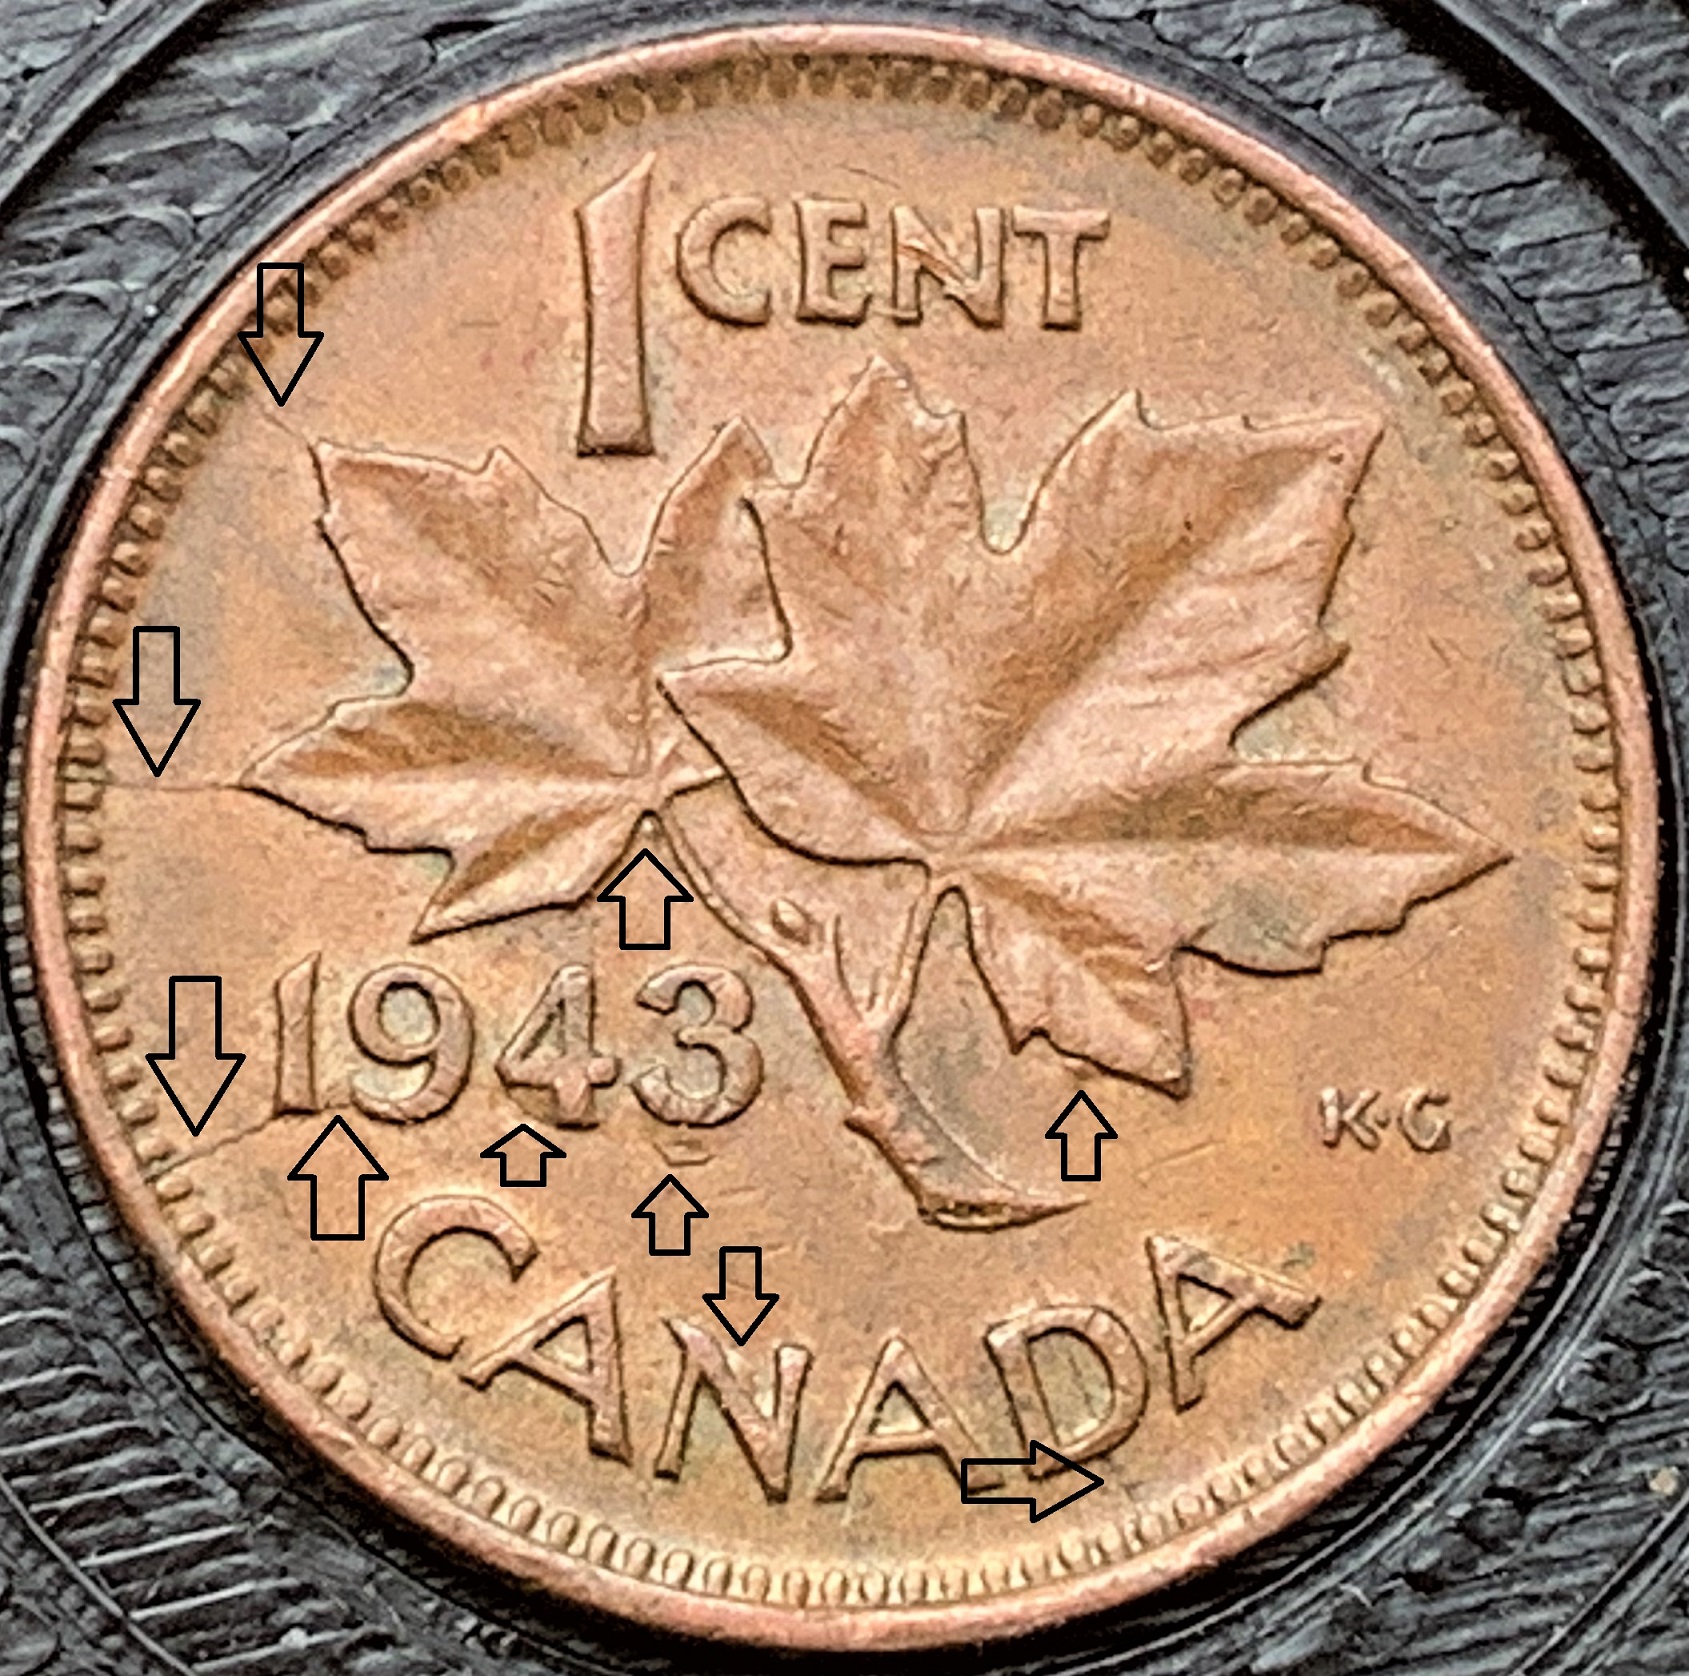 1 cent 1943 LP66h avec flèches.jpg